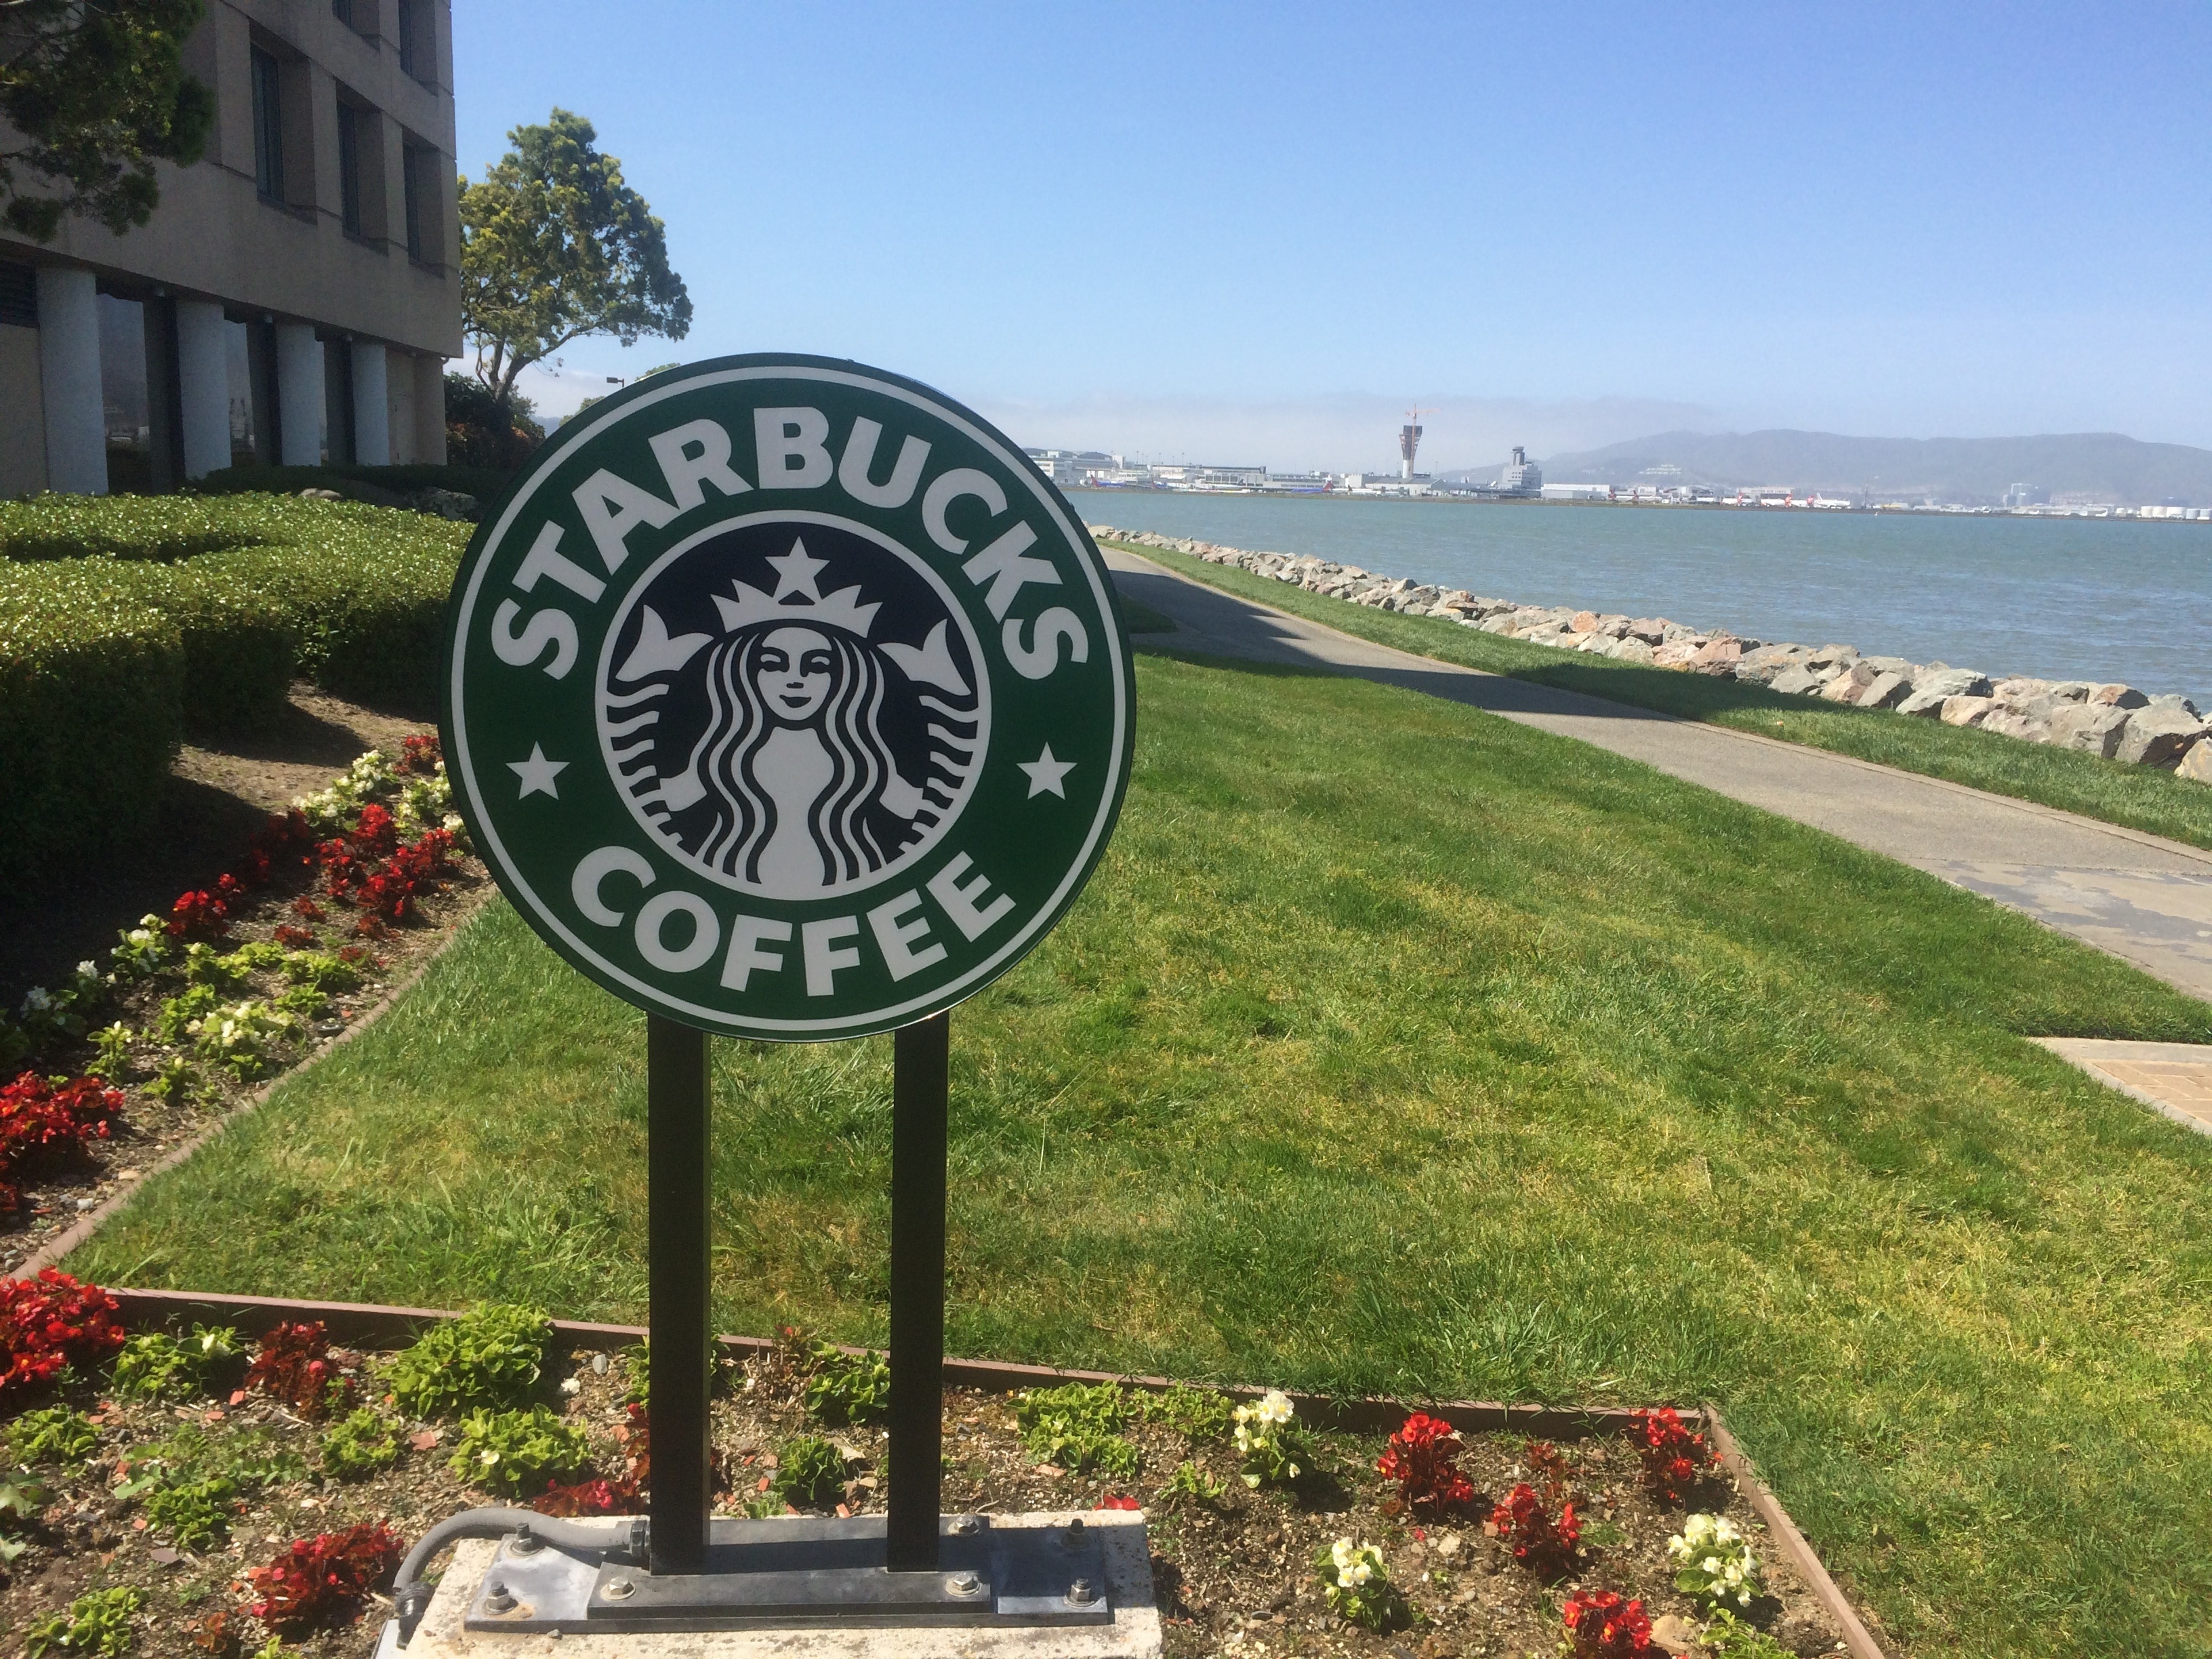 Starbucks Coffee outdoor signage near the ocean